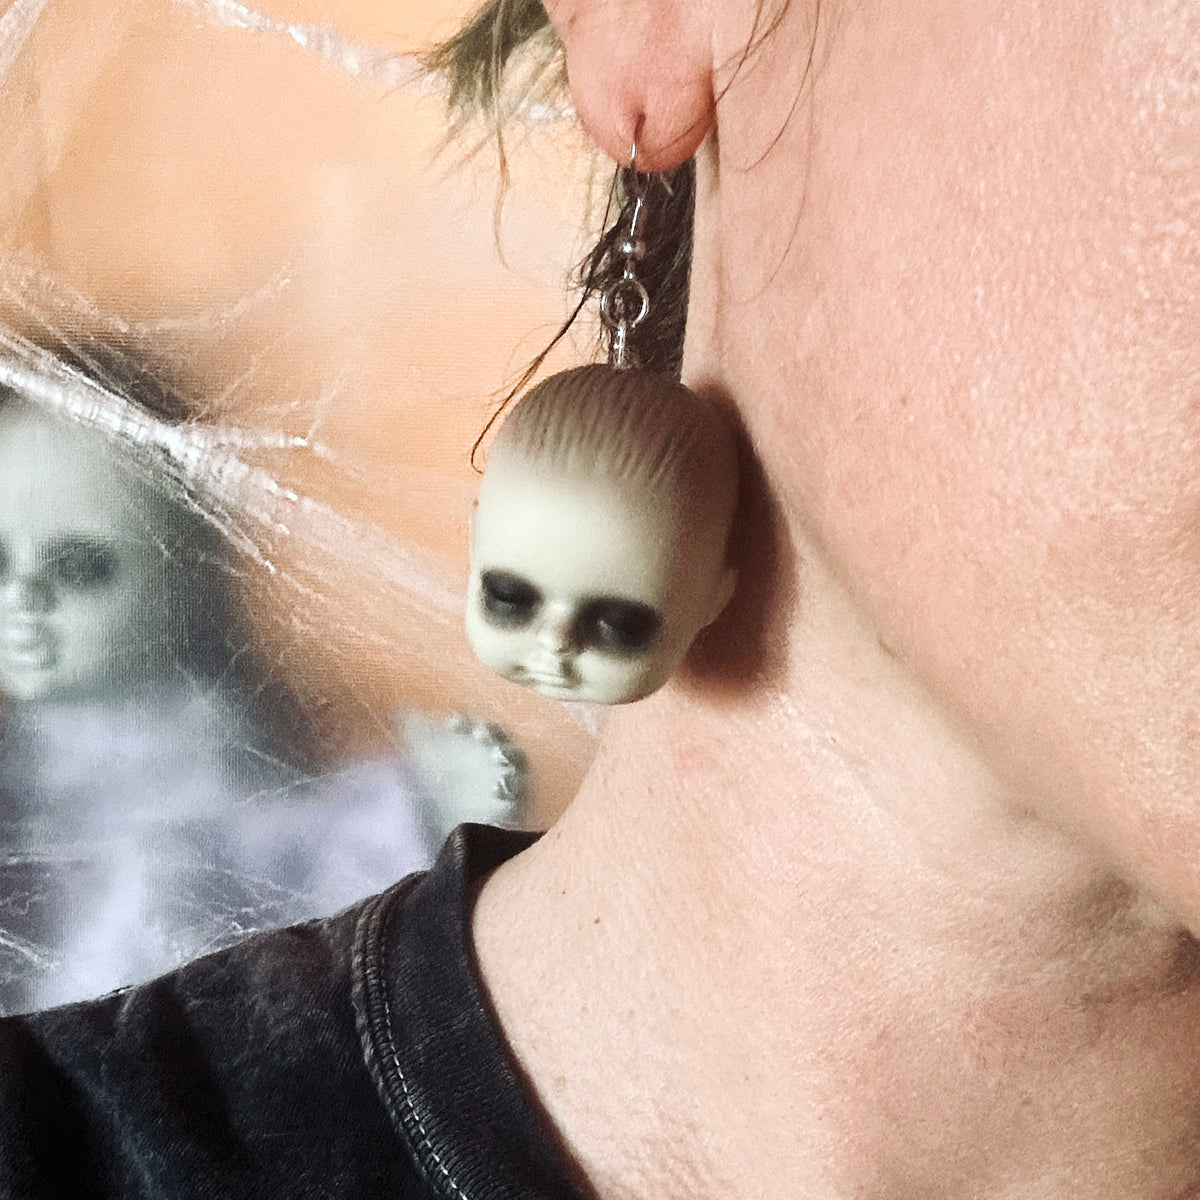 Creepy Baby Doll Head Earrings